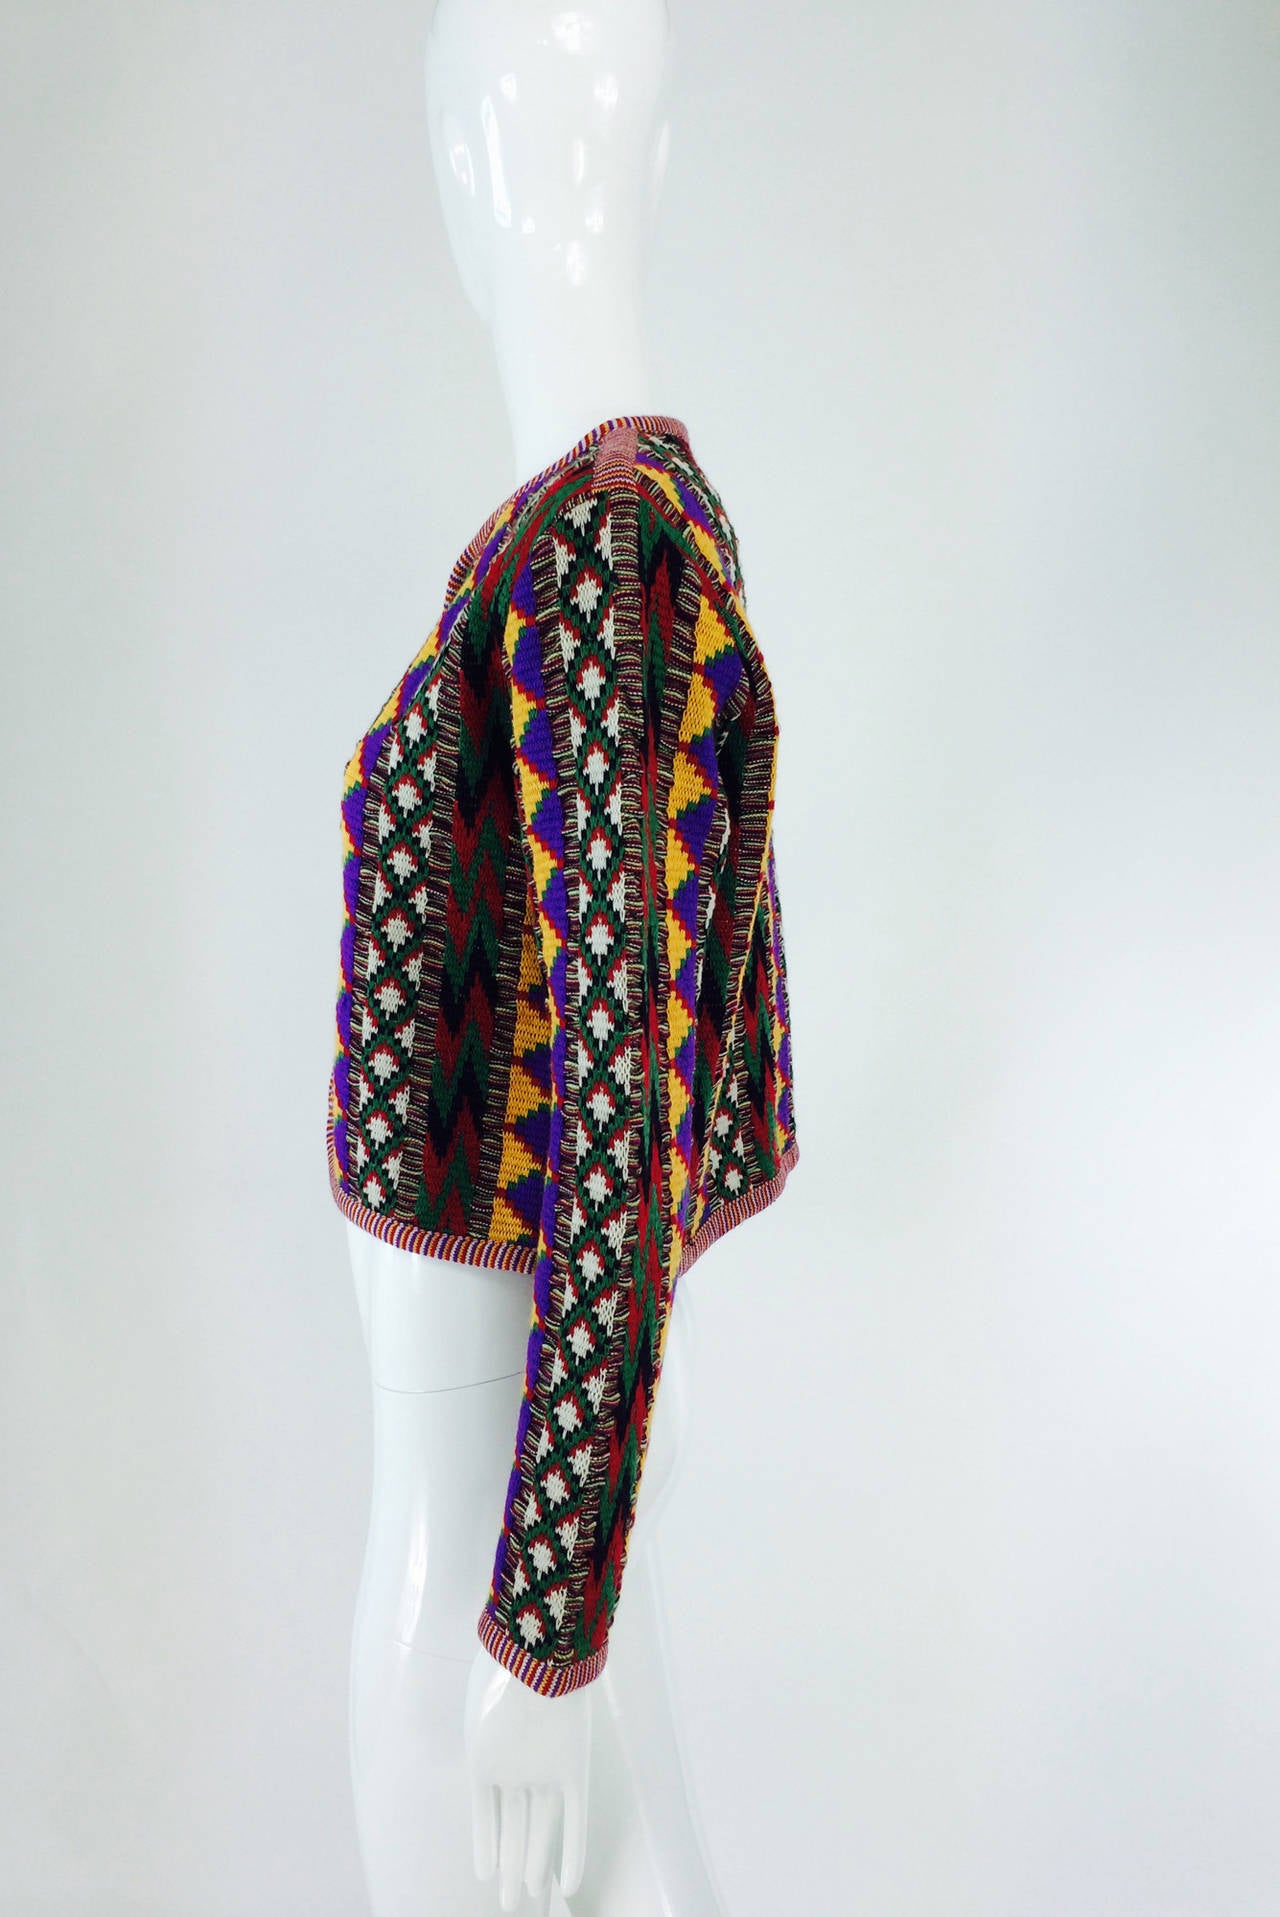 Yves St Laurent YSL Rive Gauche geometric tribal knit sweater 1970s 1